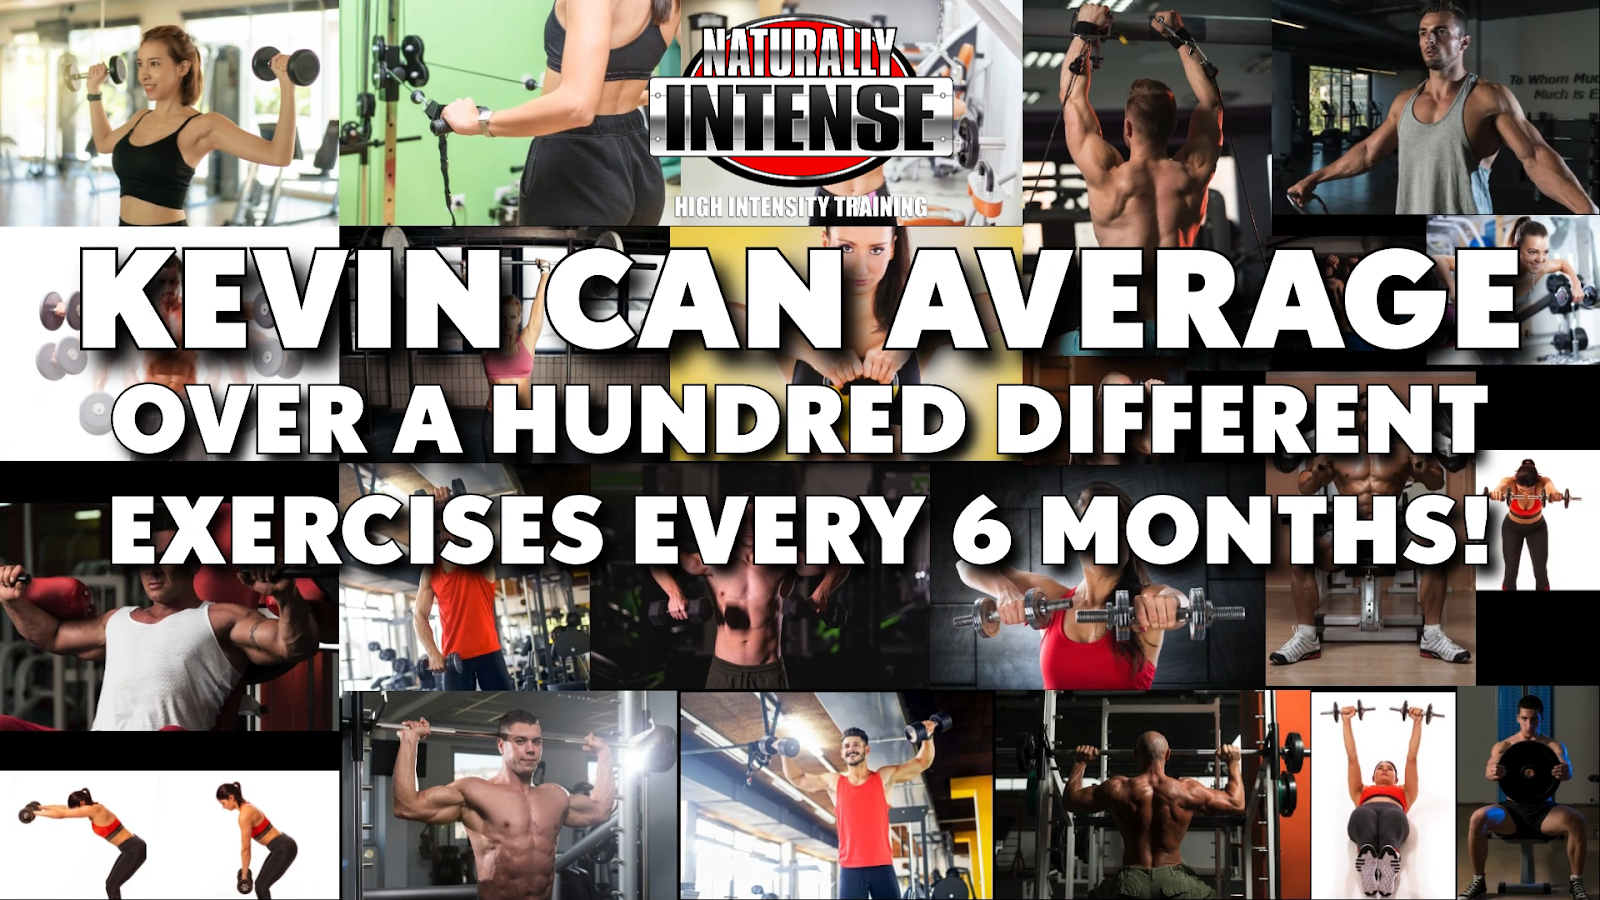 Natural Bodybuilder Kevin Richardson can average over 100 exercises in 6 months